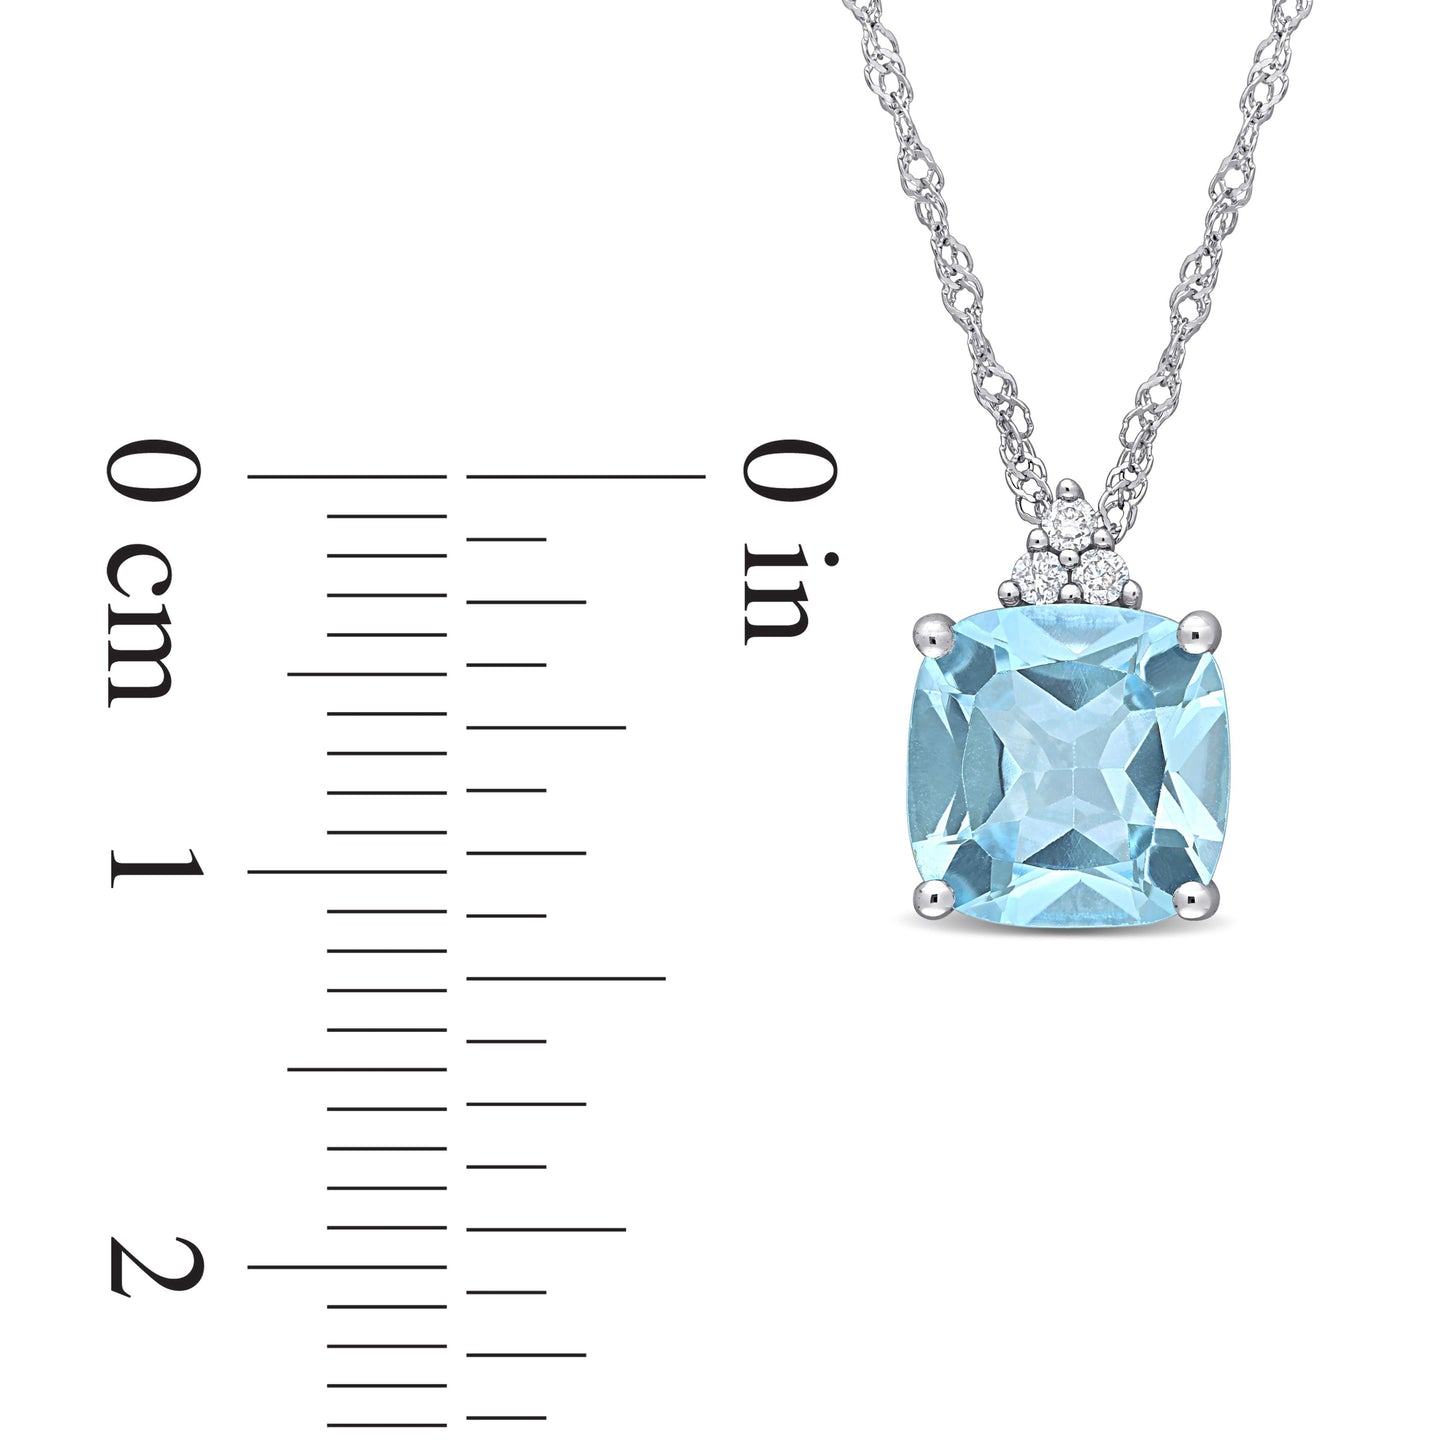 Sophia B 2 1/2ct Sky Blue Topaz Necklace with Diamond Accents